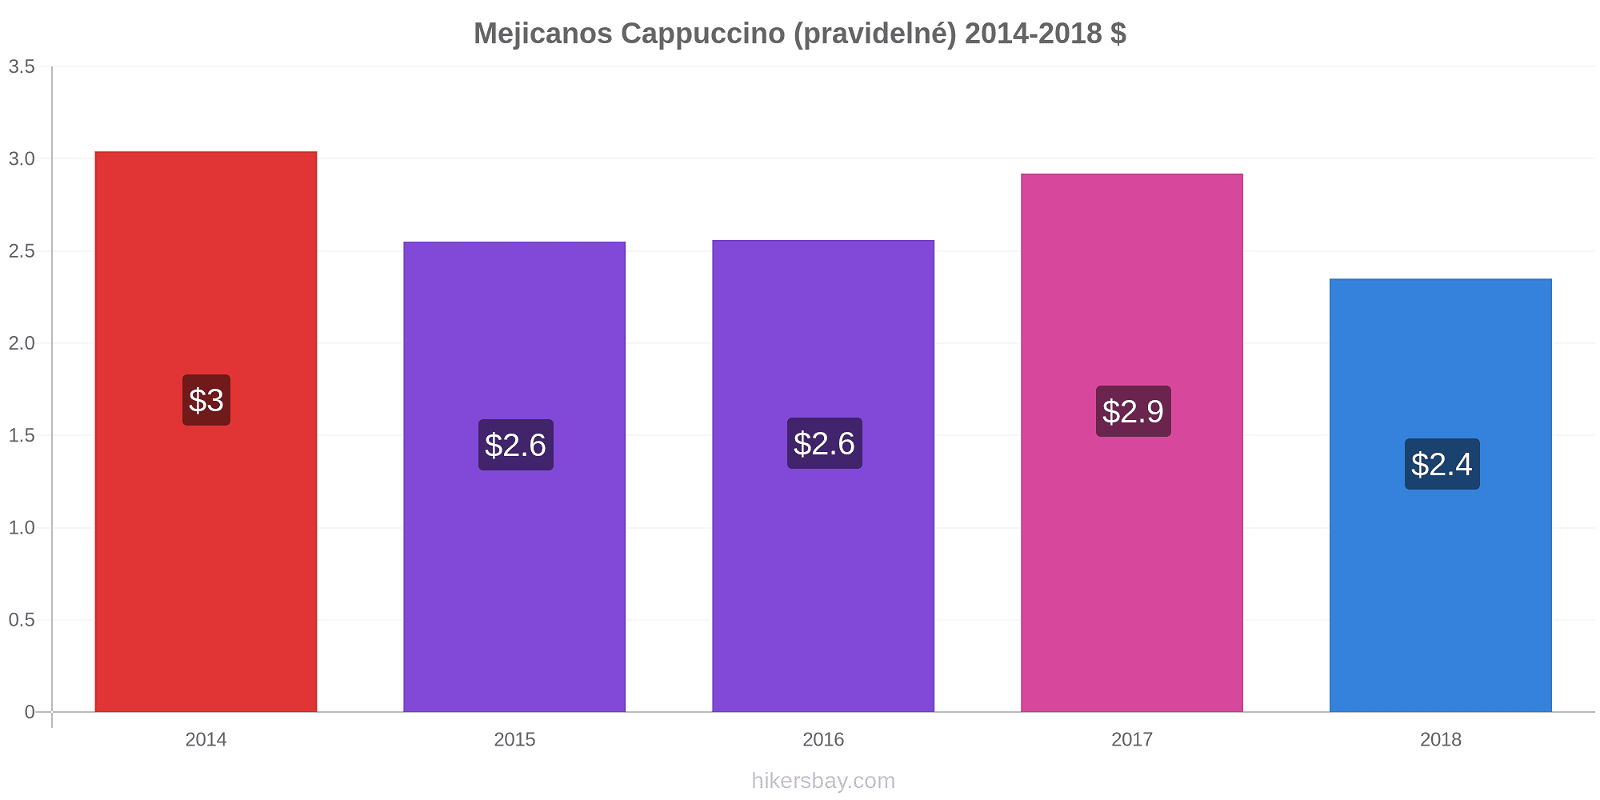 Mejicanos změny cen Cappuccino (pravidelné) hikersbay.com